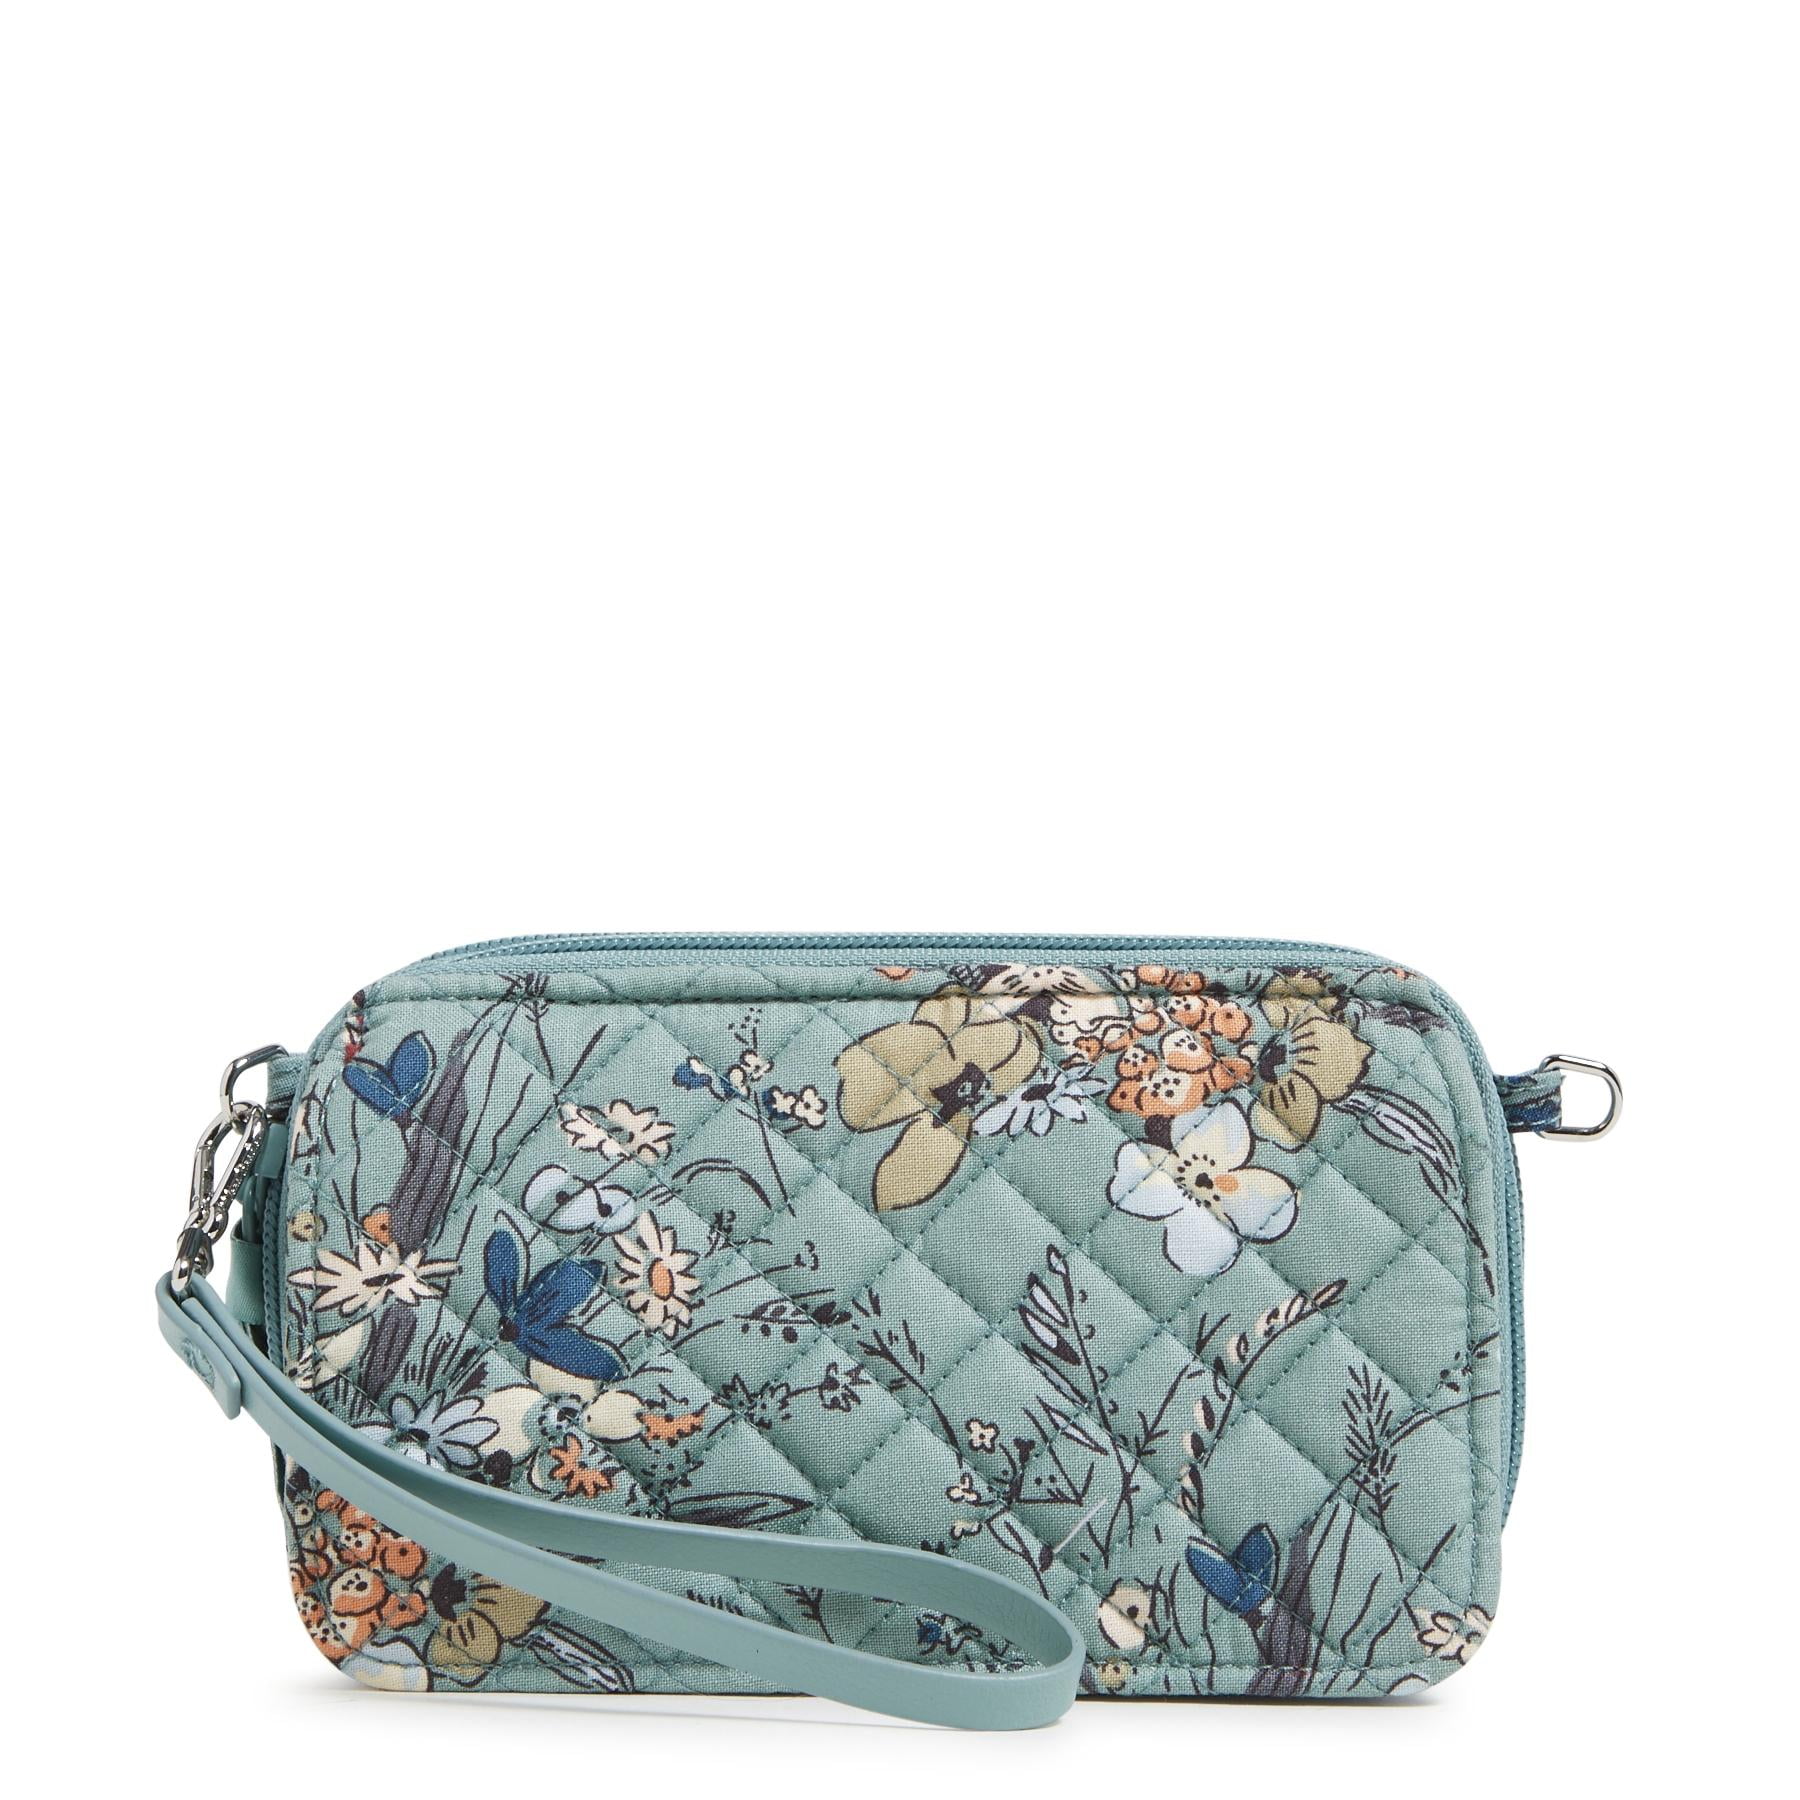 Vera bradley carson mini shoulder bag + FREE SHIPPING